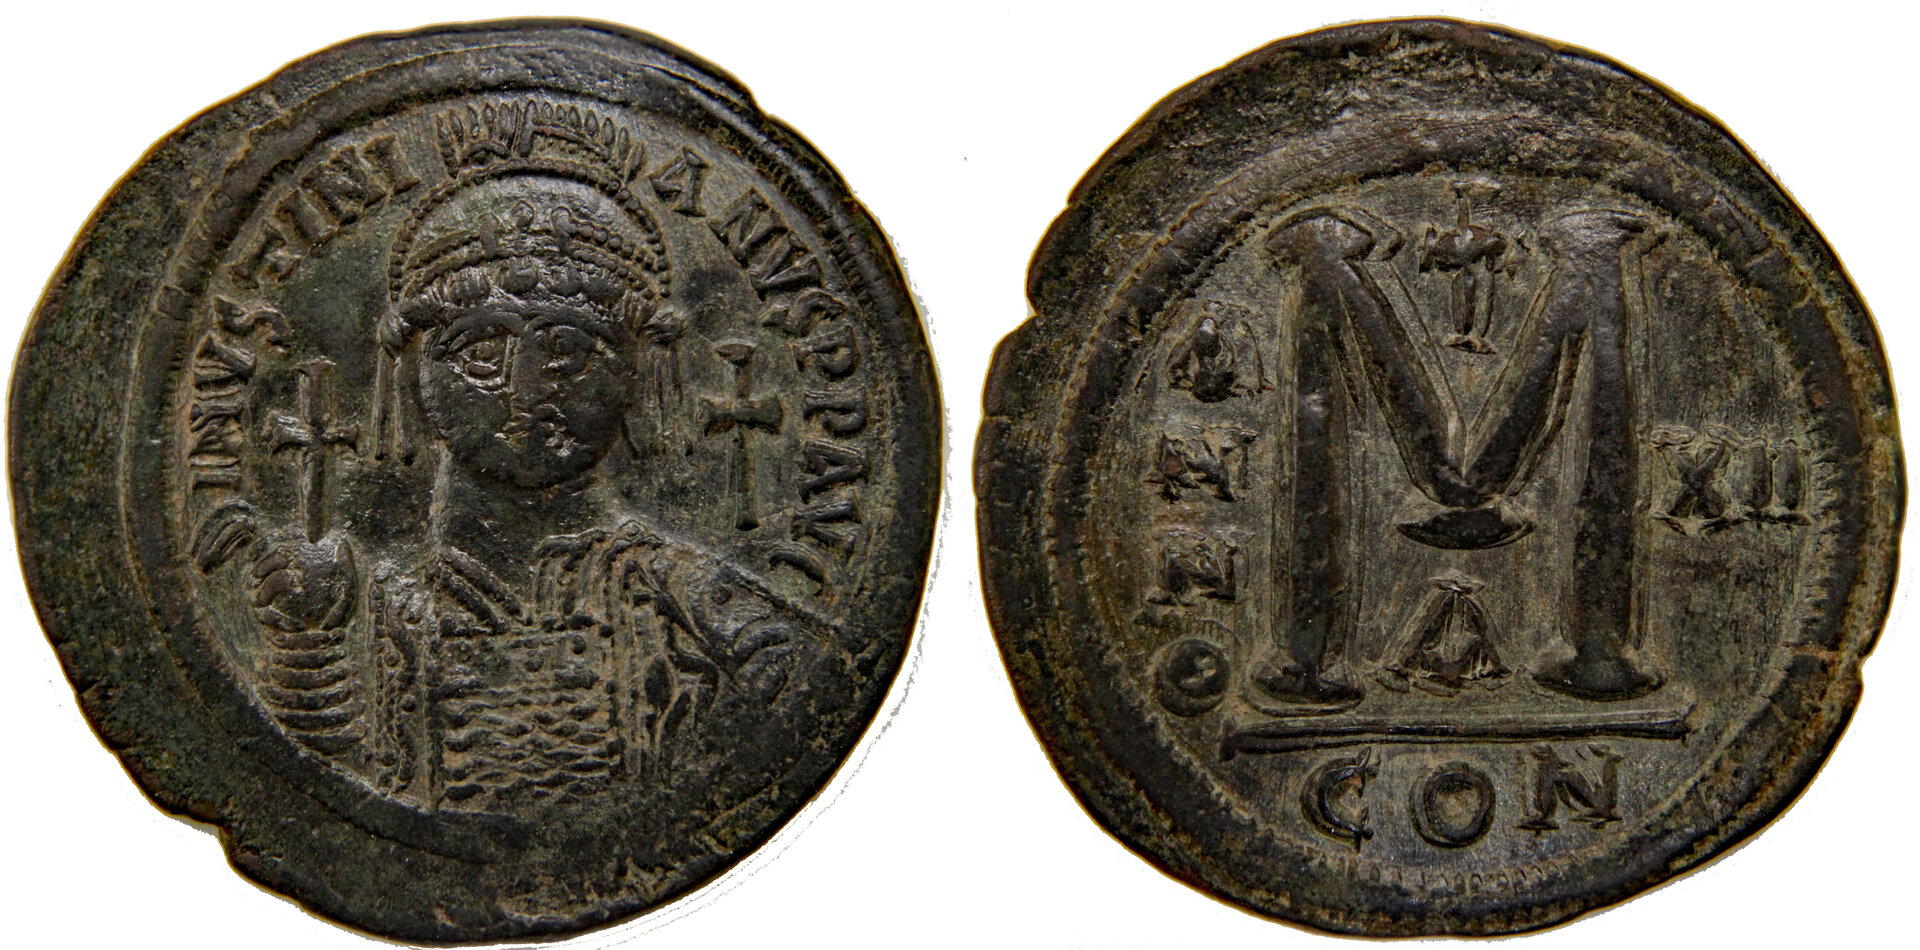 D-Camera Justinian I Follis, Reform, Year 12, 23 grams,  8-11-20.jpg